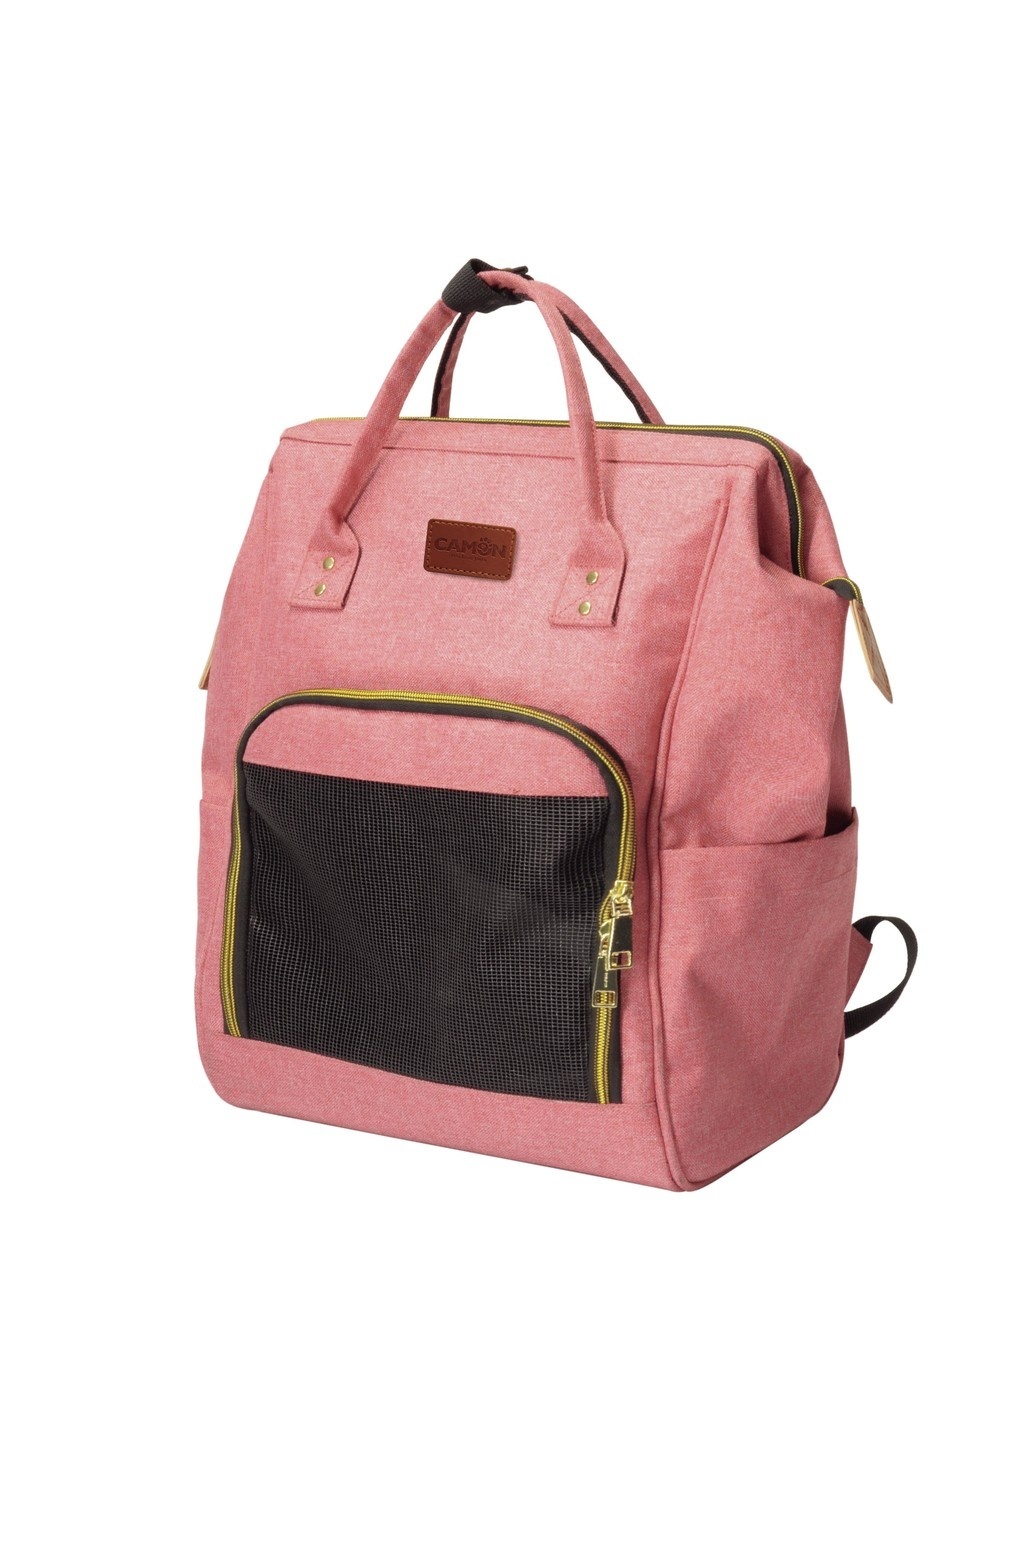 Camon Camon рюкзак-переноска Pet Fashion для животных розовый деним (30*20*43) camon camon рюкзак переноска pet голубая 27x24x42 см 812 г